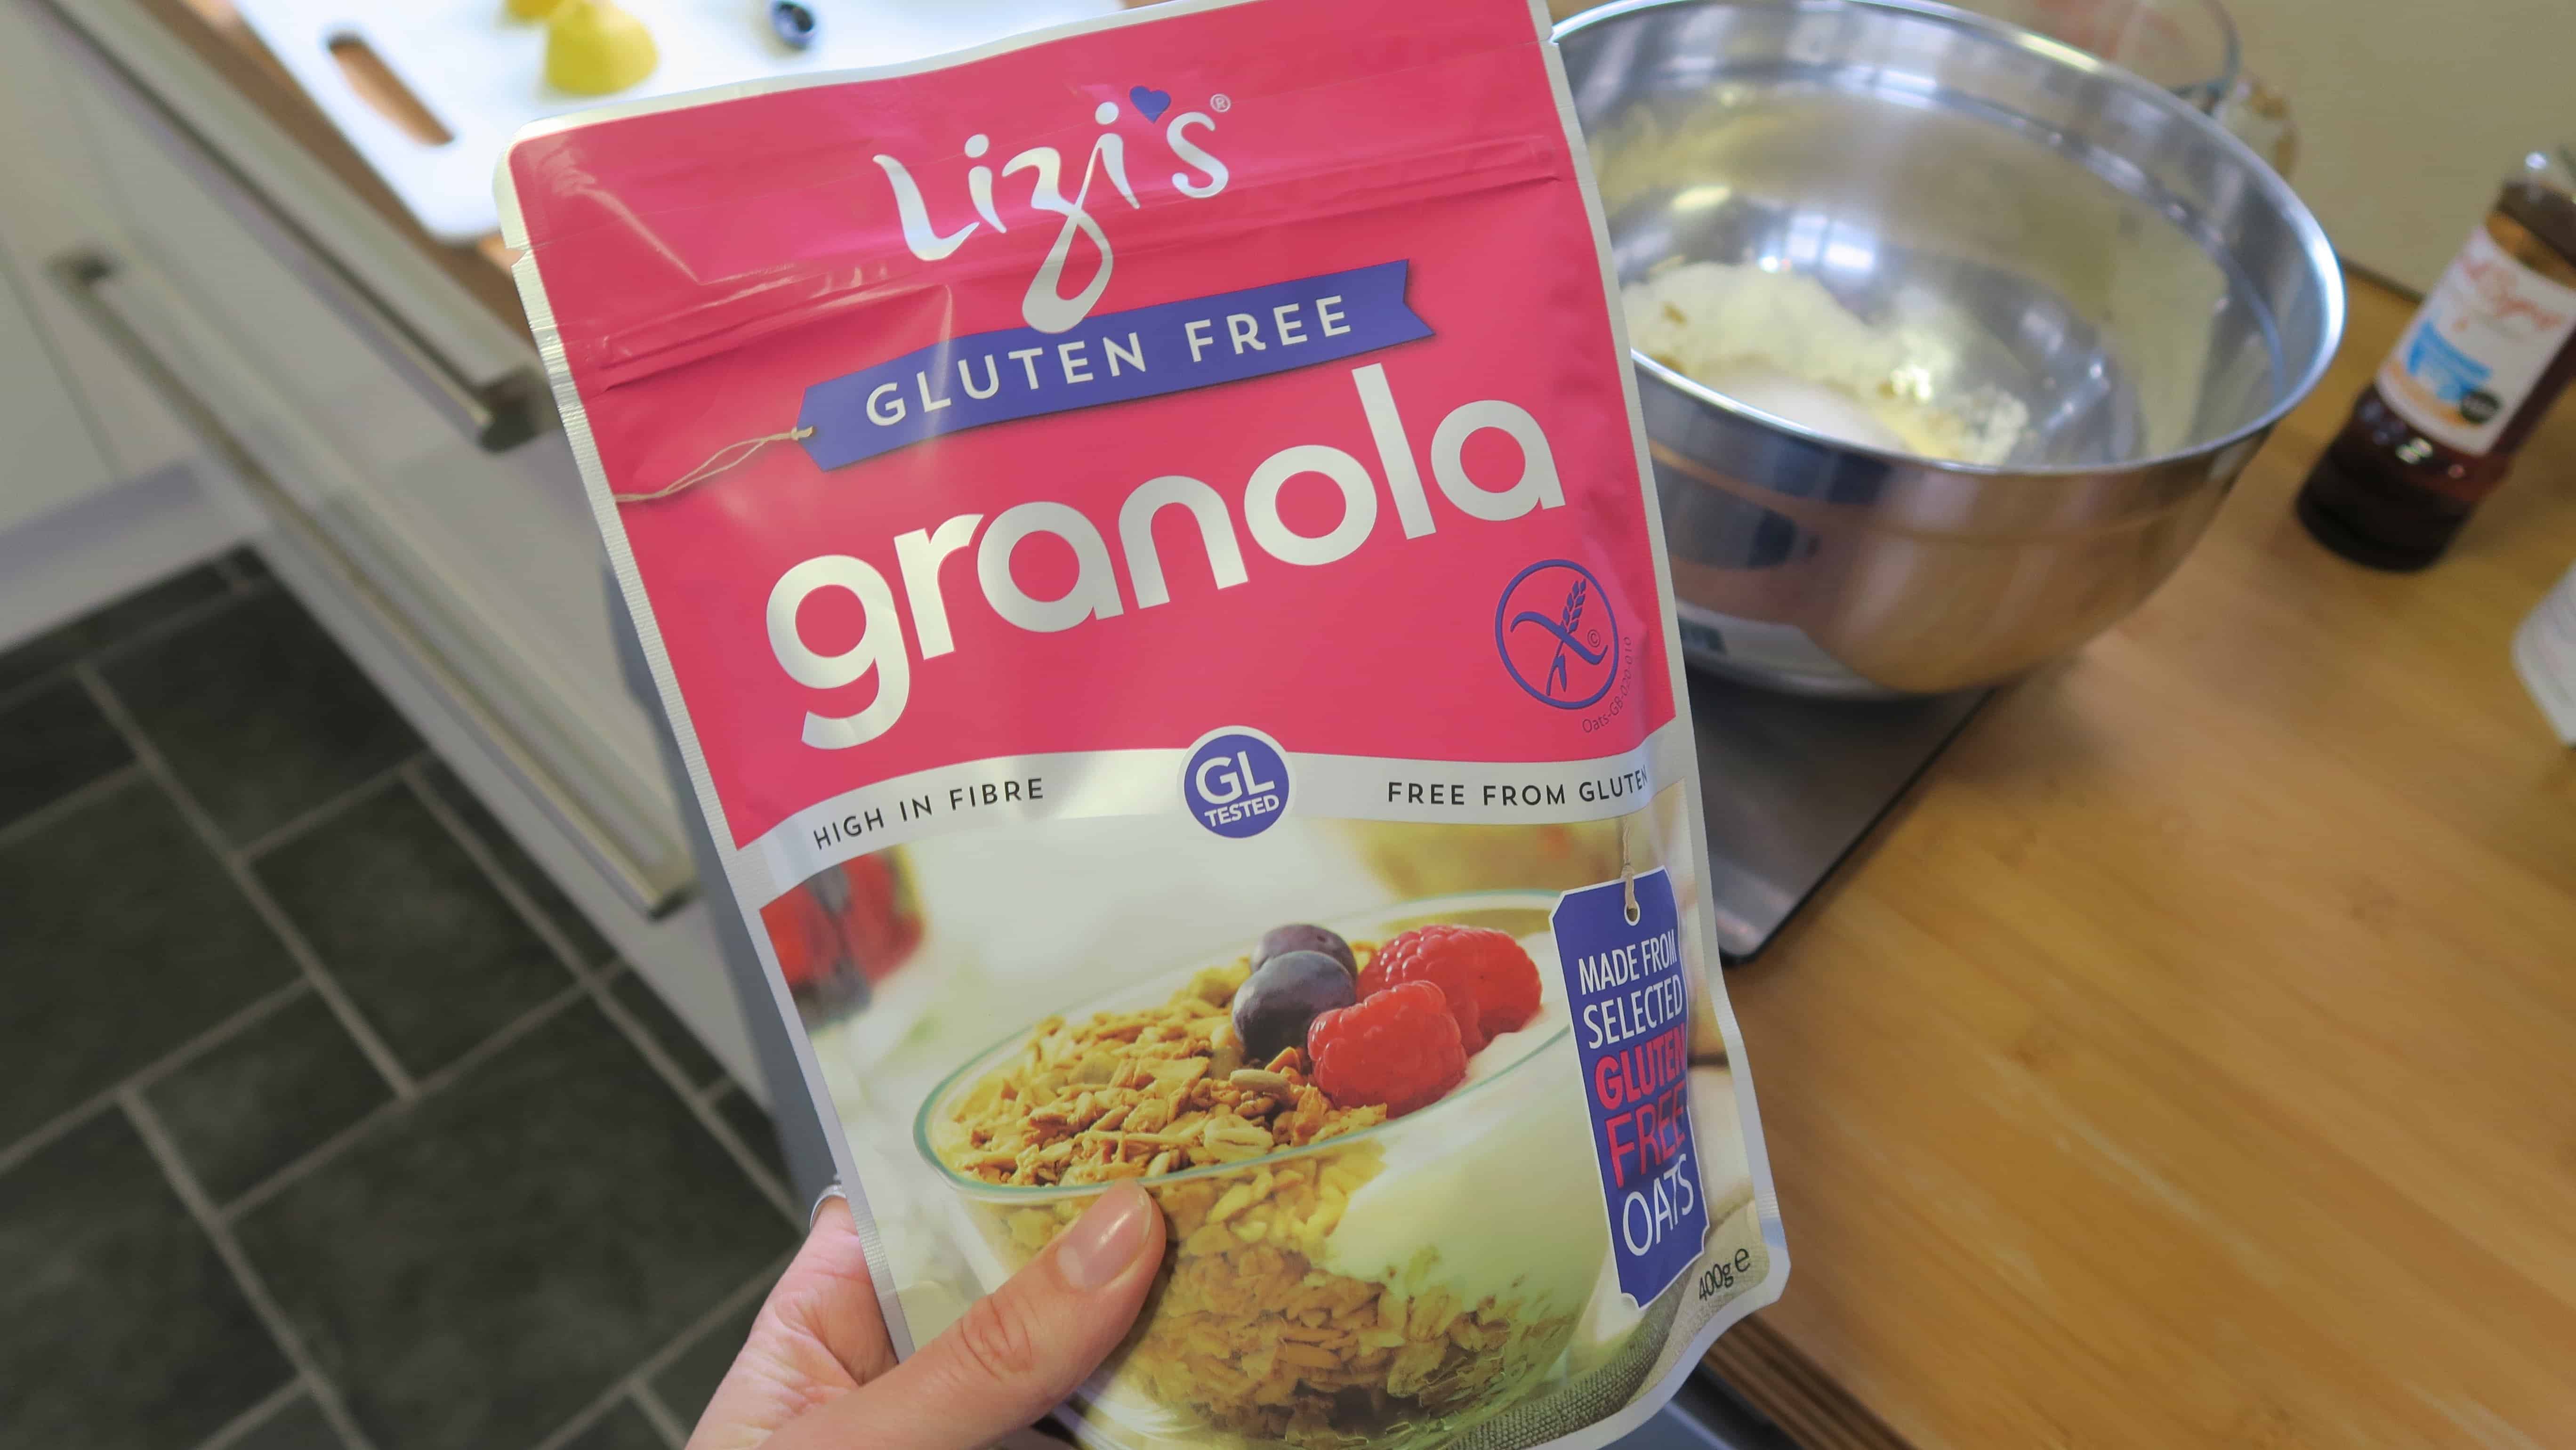 lizis gluten free granola